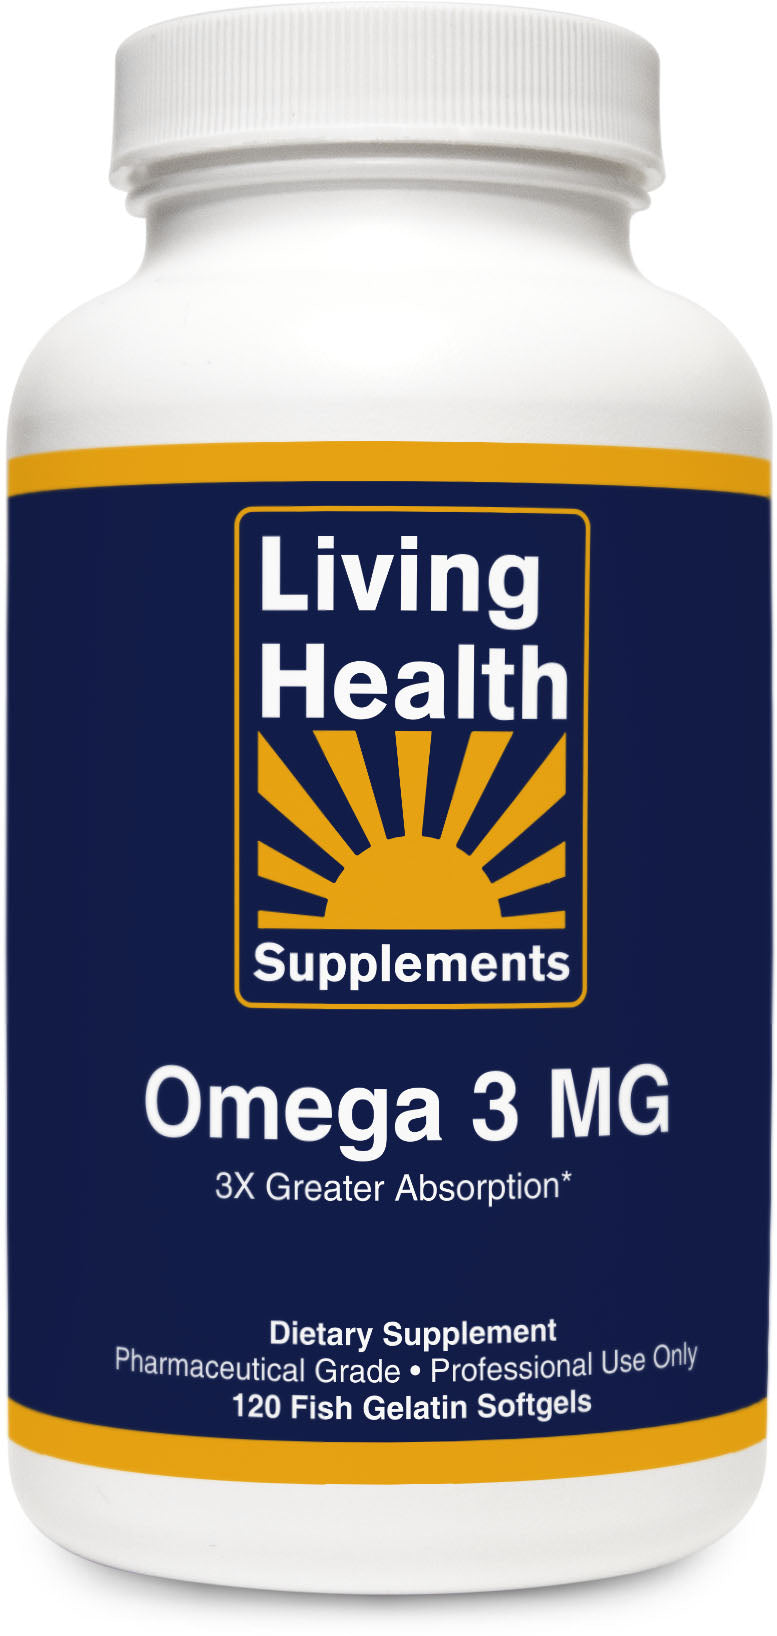 Omega 3 MG - Living Health Market